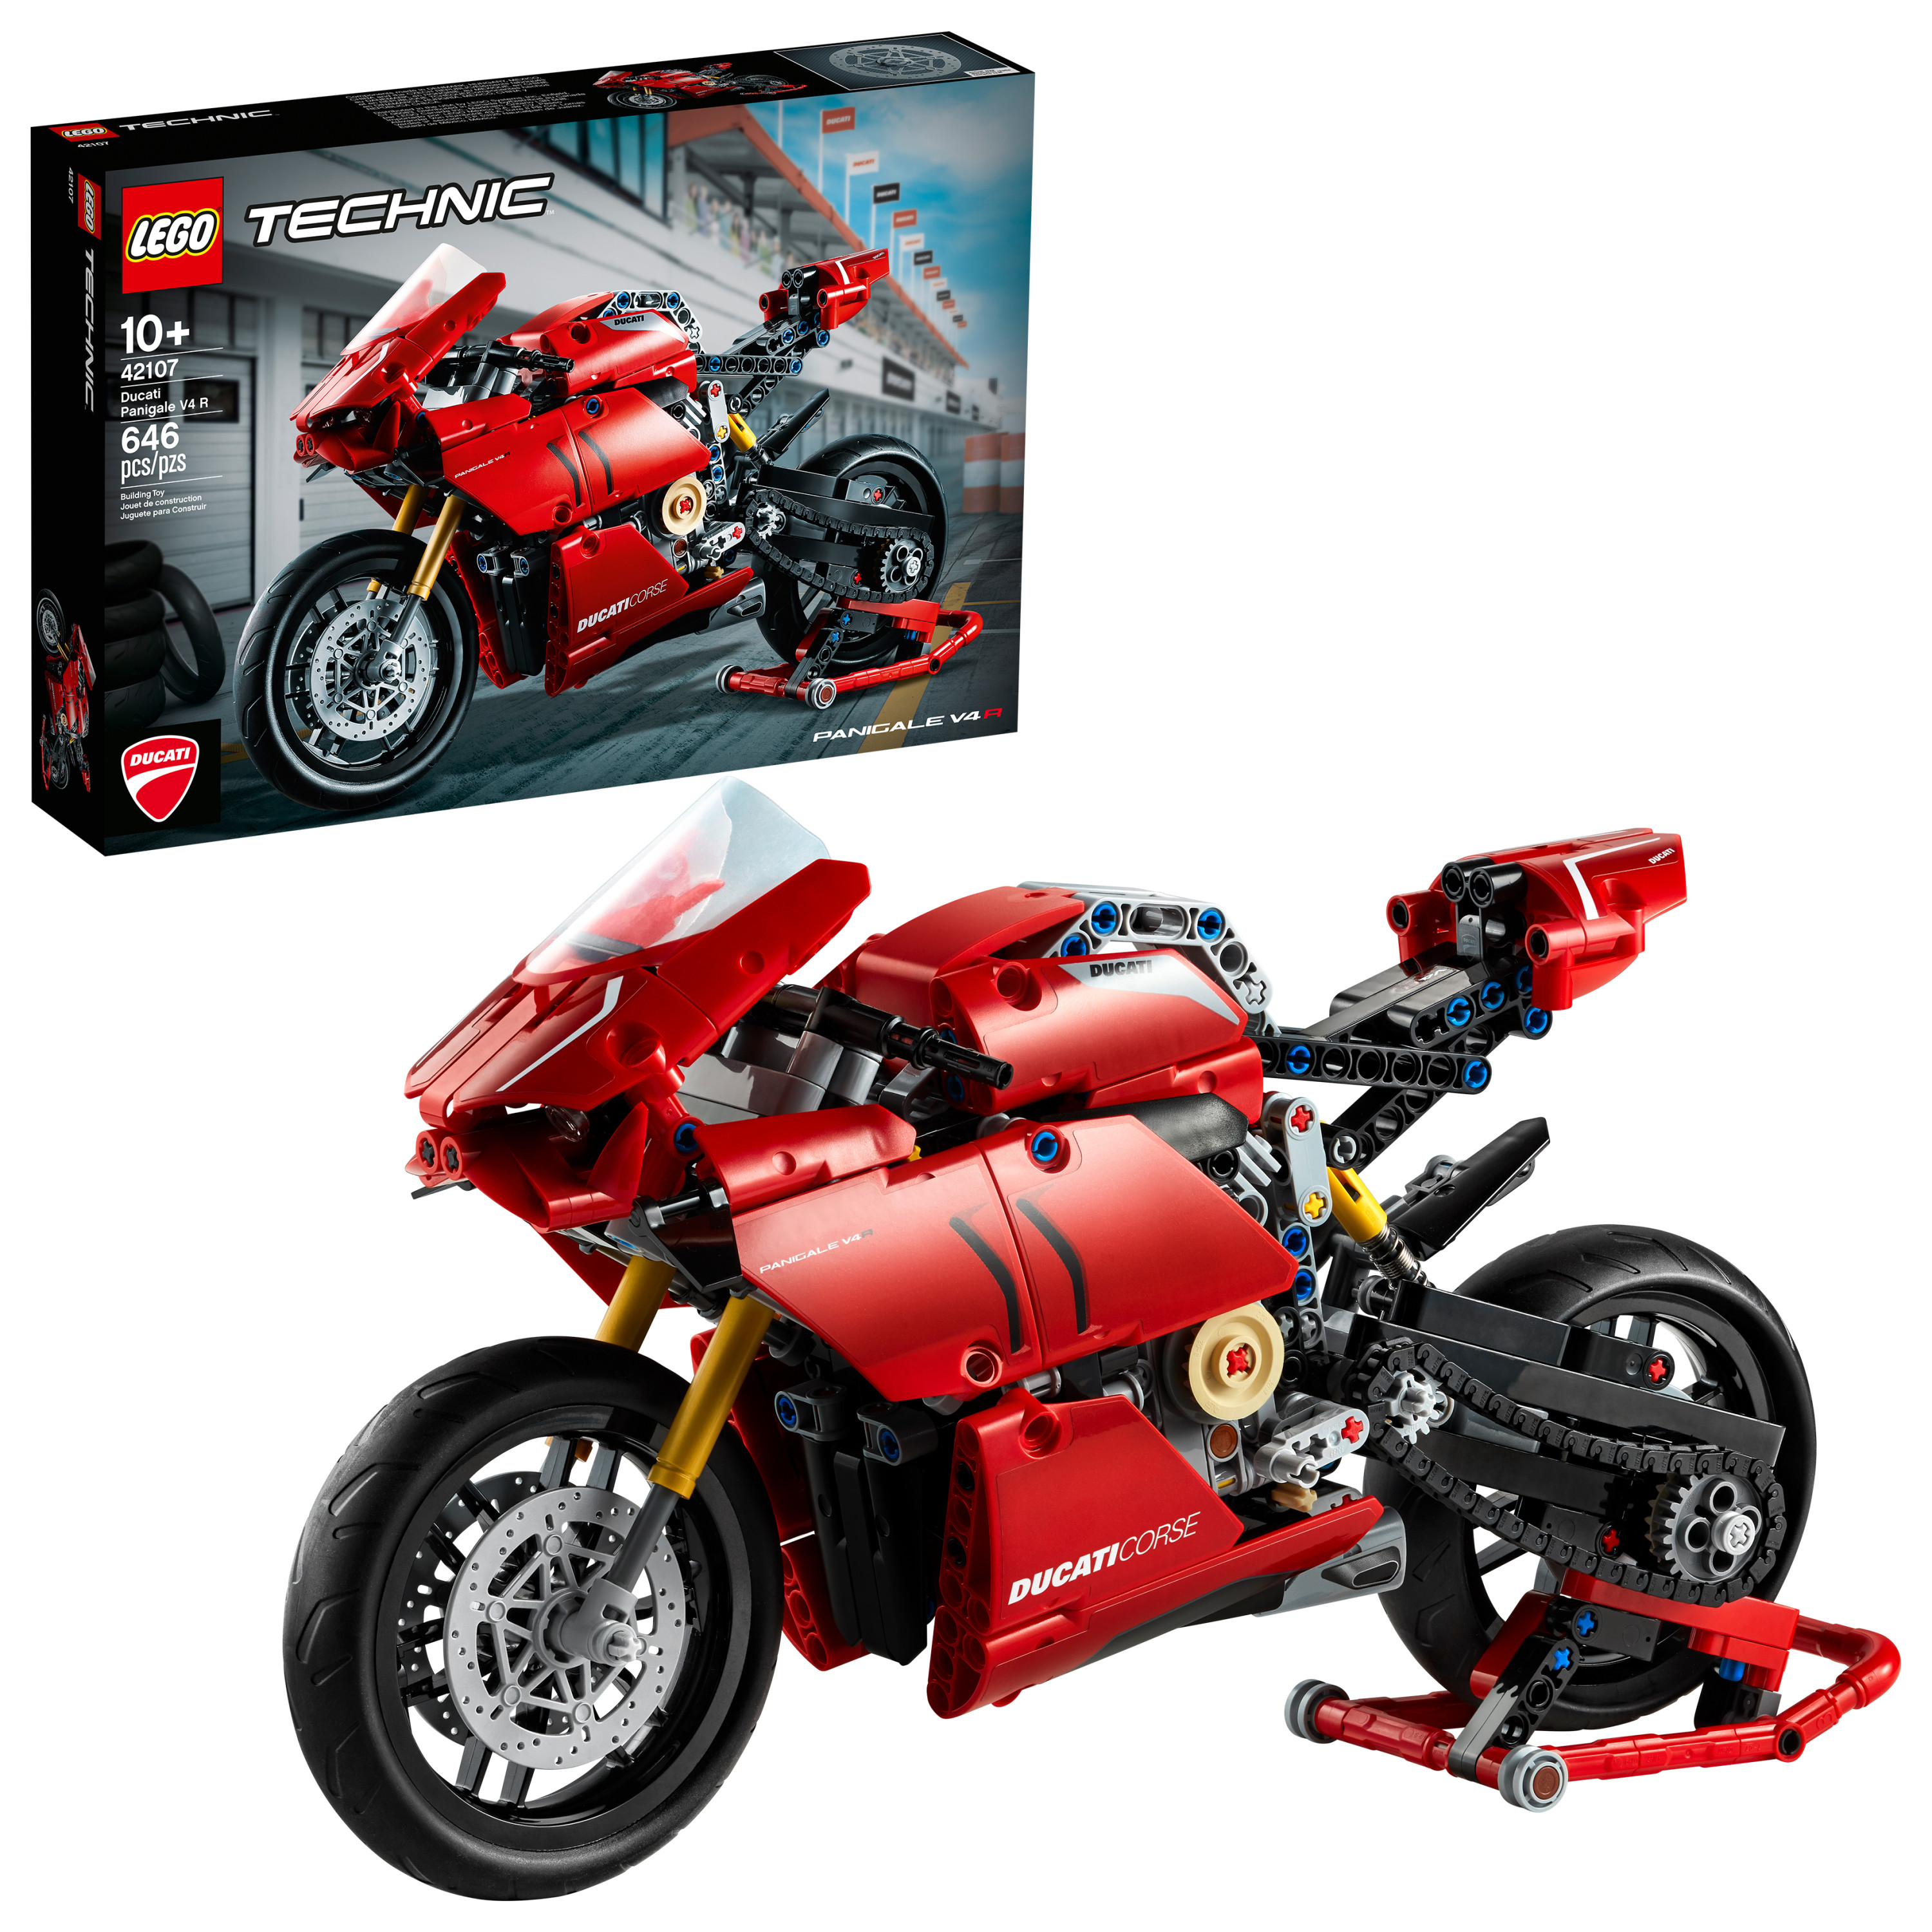 LEGO Ducati Panigale V4 R 42107 - 20% off - Walmart.com $56.00